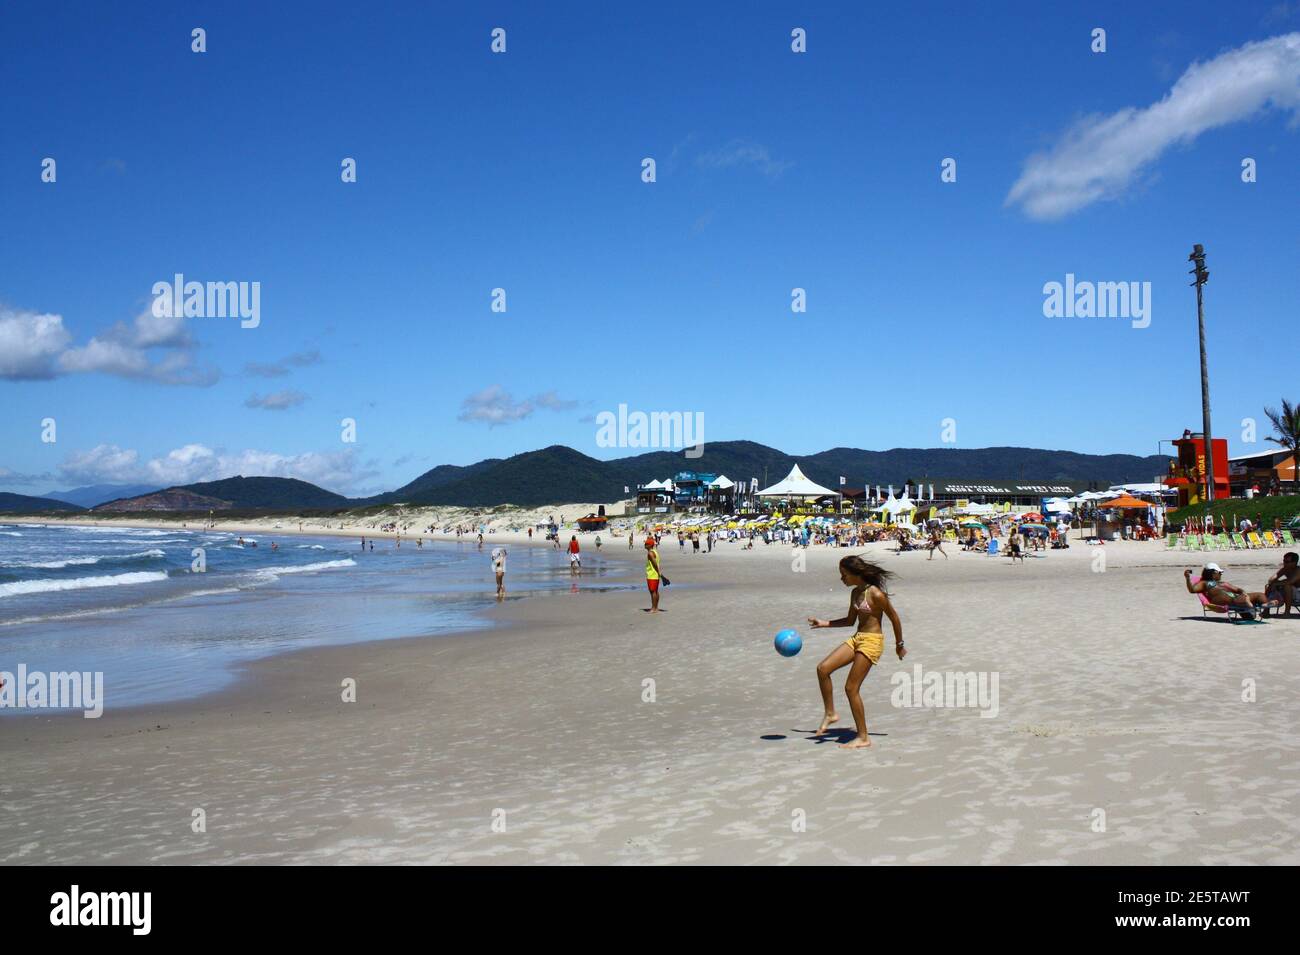 Praia da Joaquina - Florianópolis Ü Brasilien Stockfoto